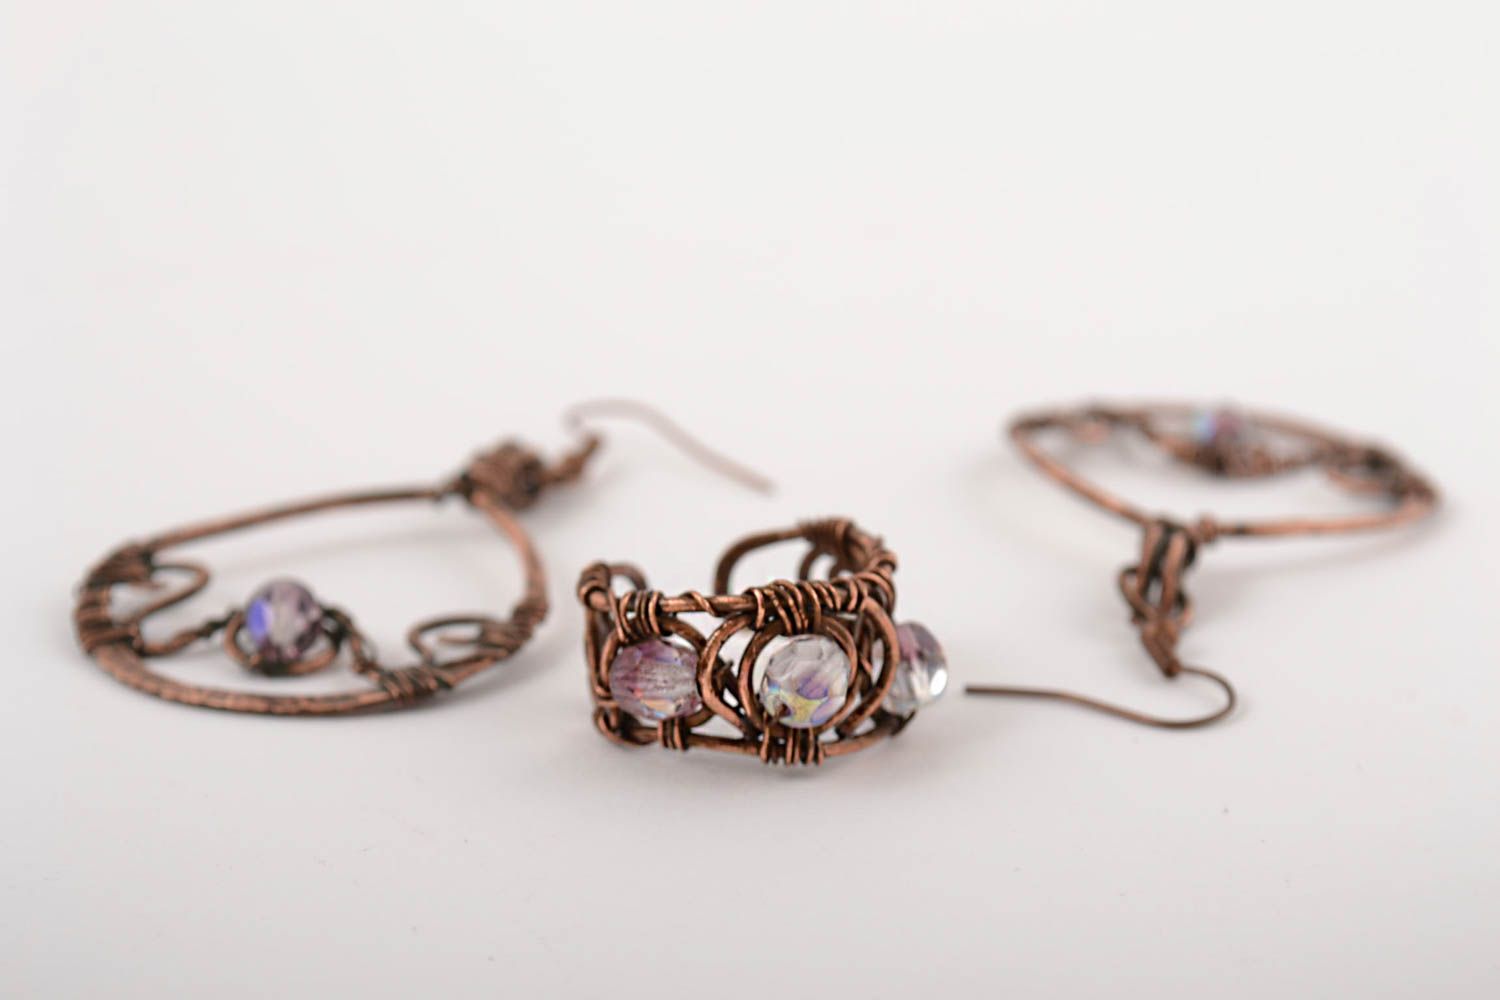 Fashionable jewelry set designer cute accessories handmade unusual jewelry photo 4